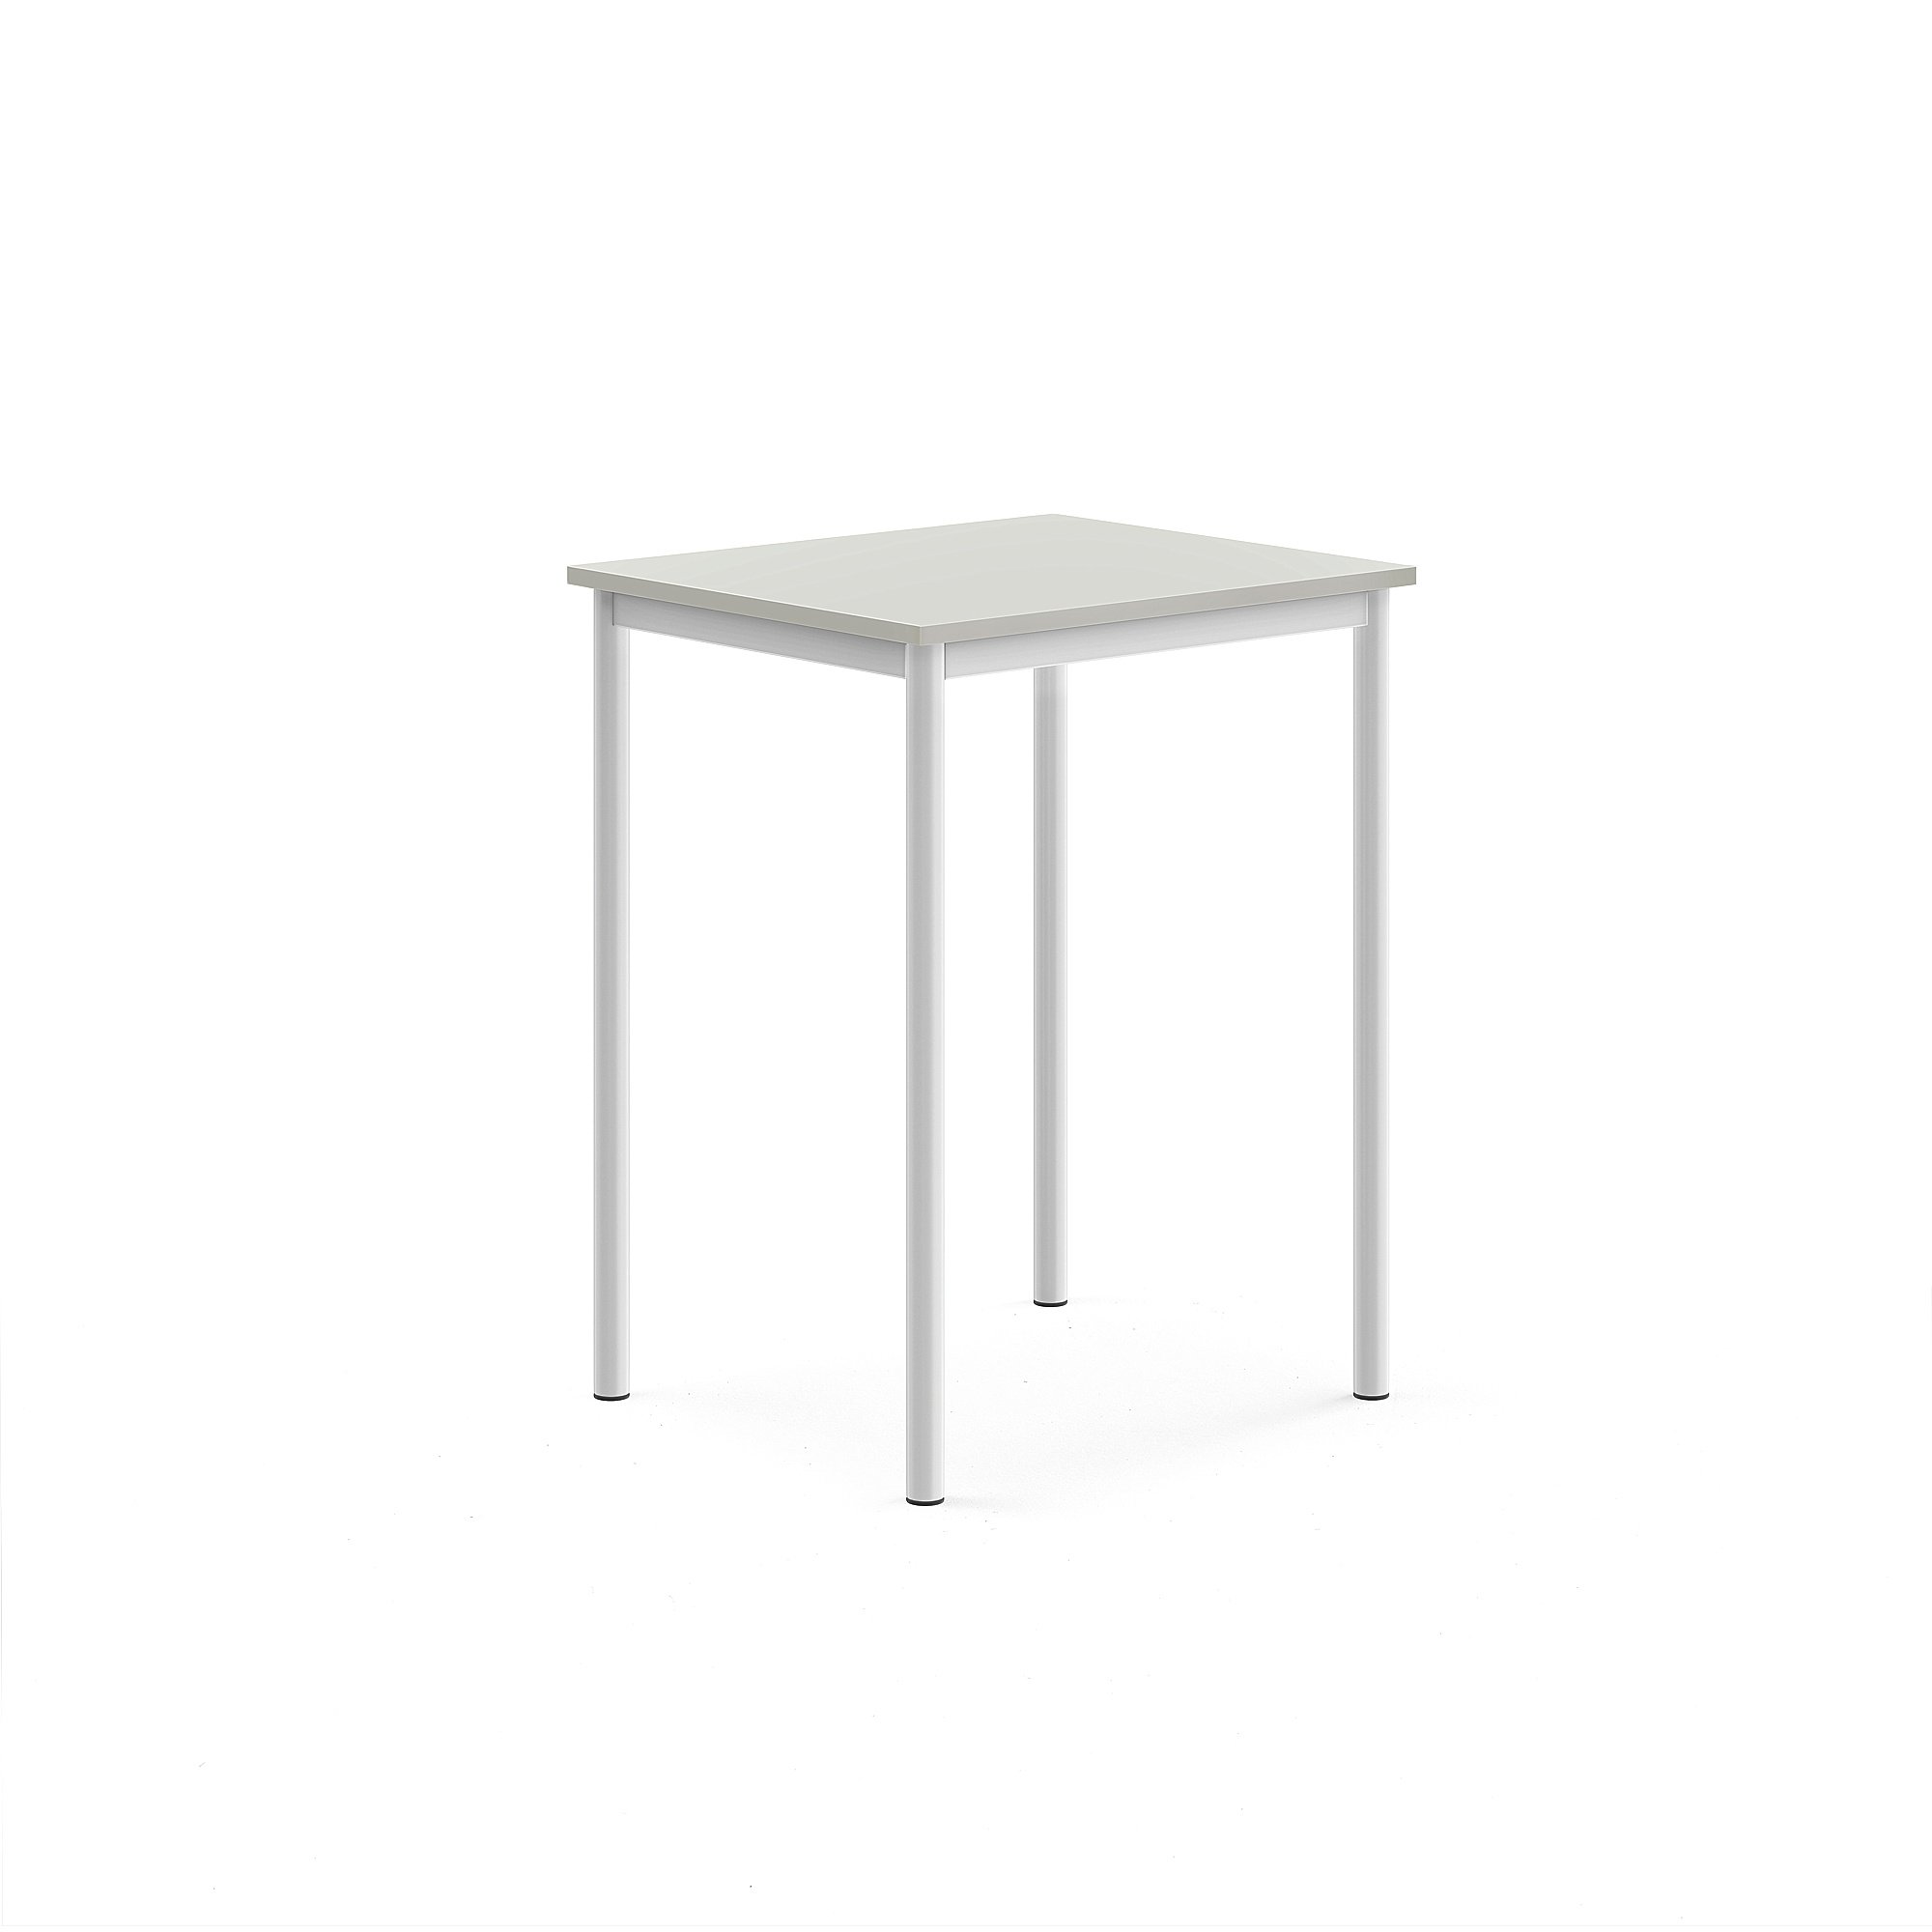 Stůl SONITUS, 700x600x900 mm, bílé nohy, HPL deska tlumící hluk, šedá